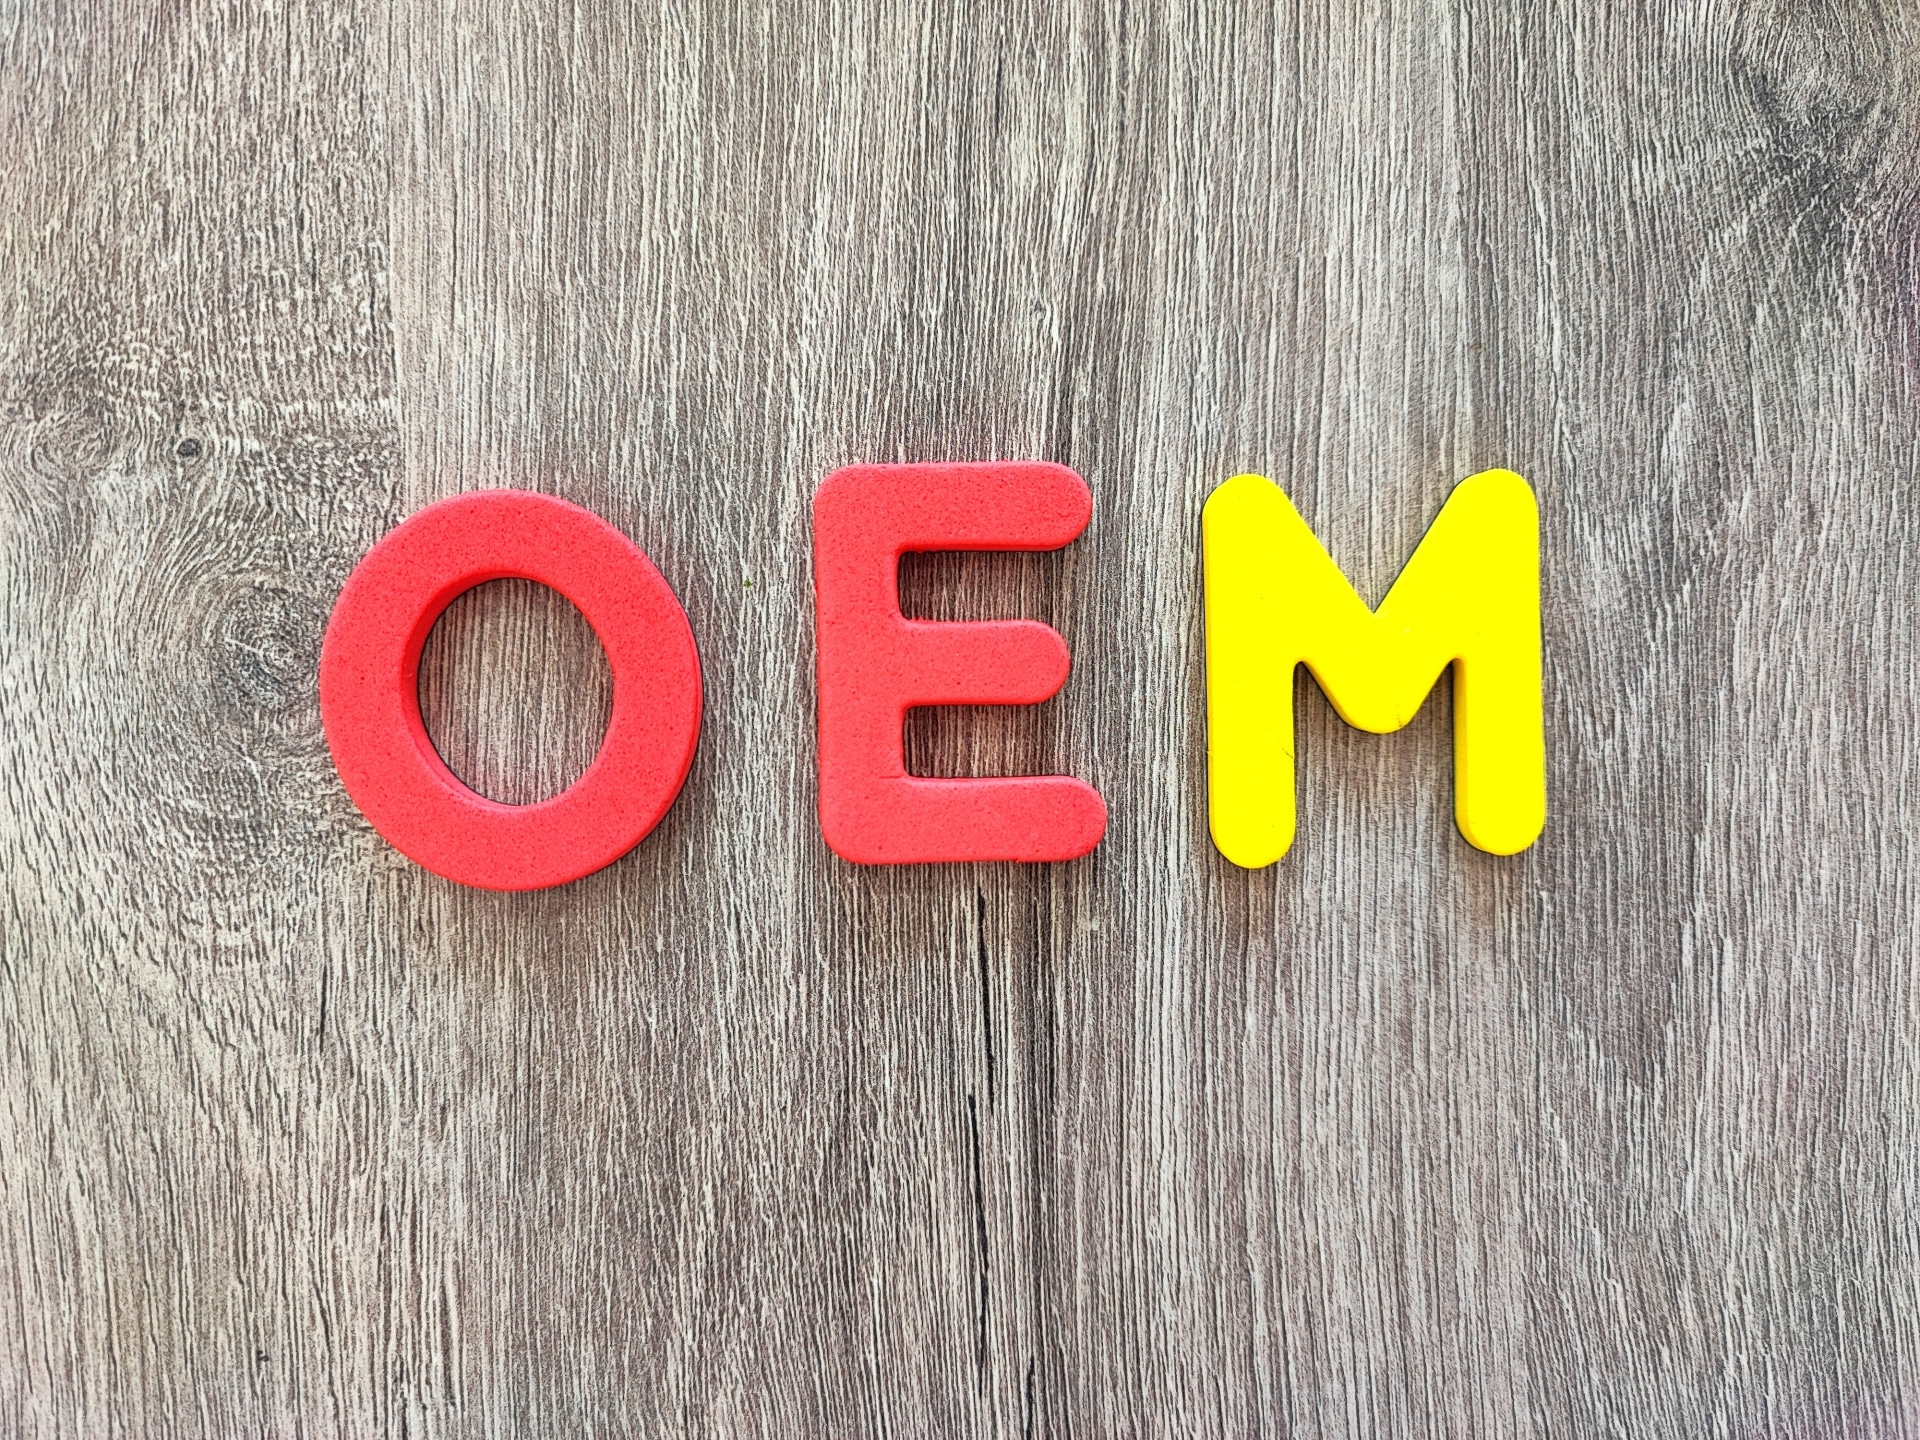 oem-innovation-production